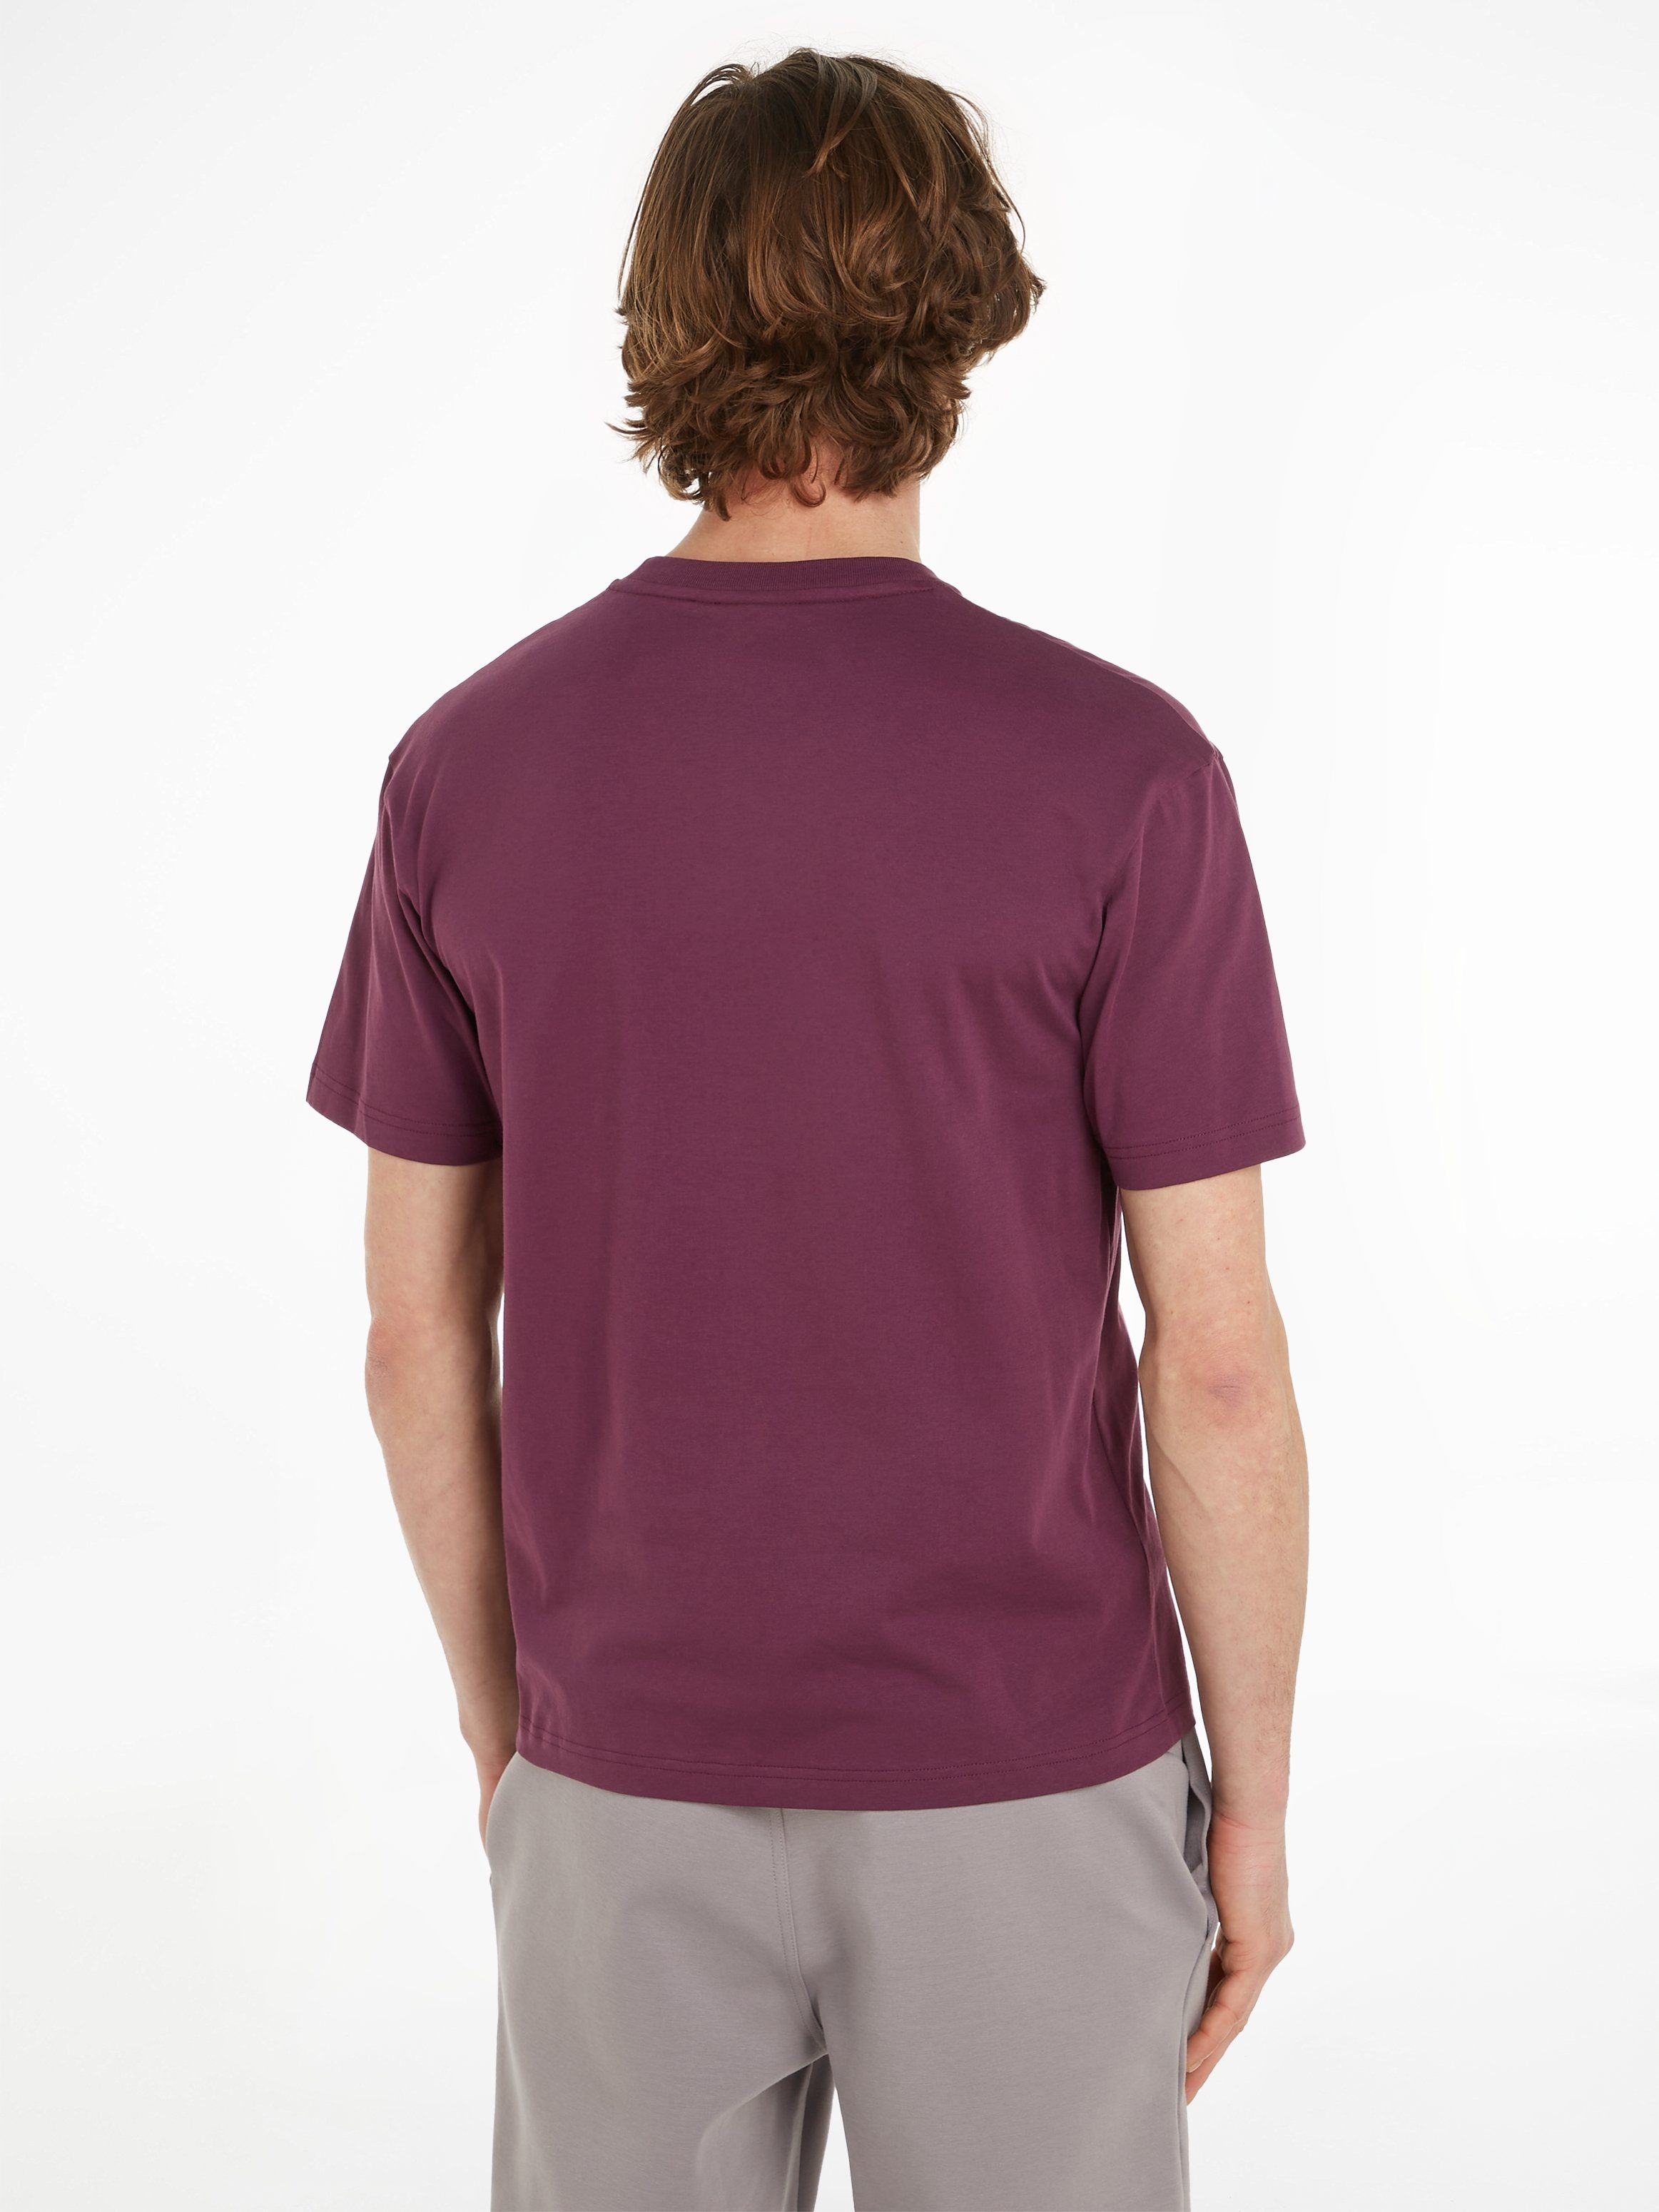 Calvin Klein LOGO Markenlabel Plum COMFORT aufgedrucktem Italian T-Shirt HERO mit T-SHIRT